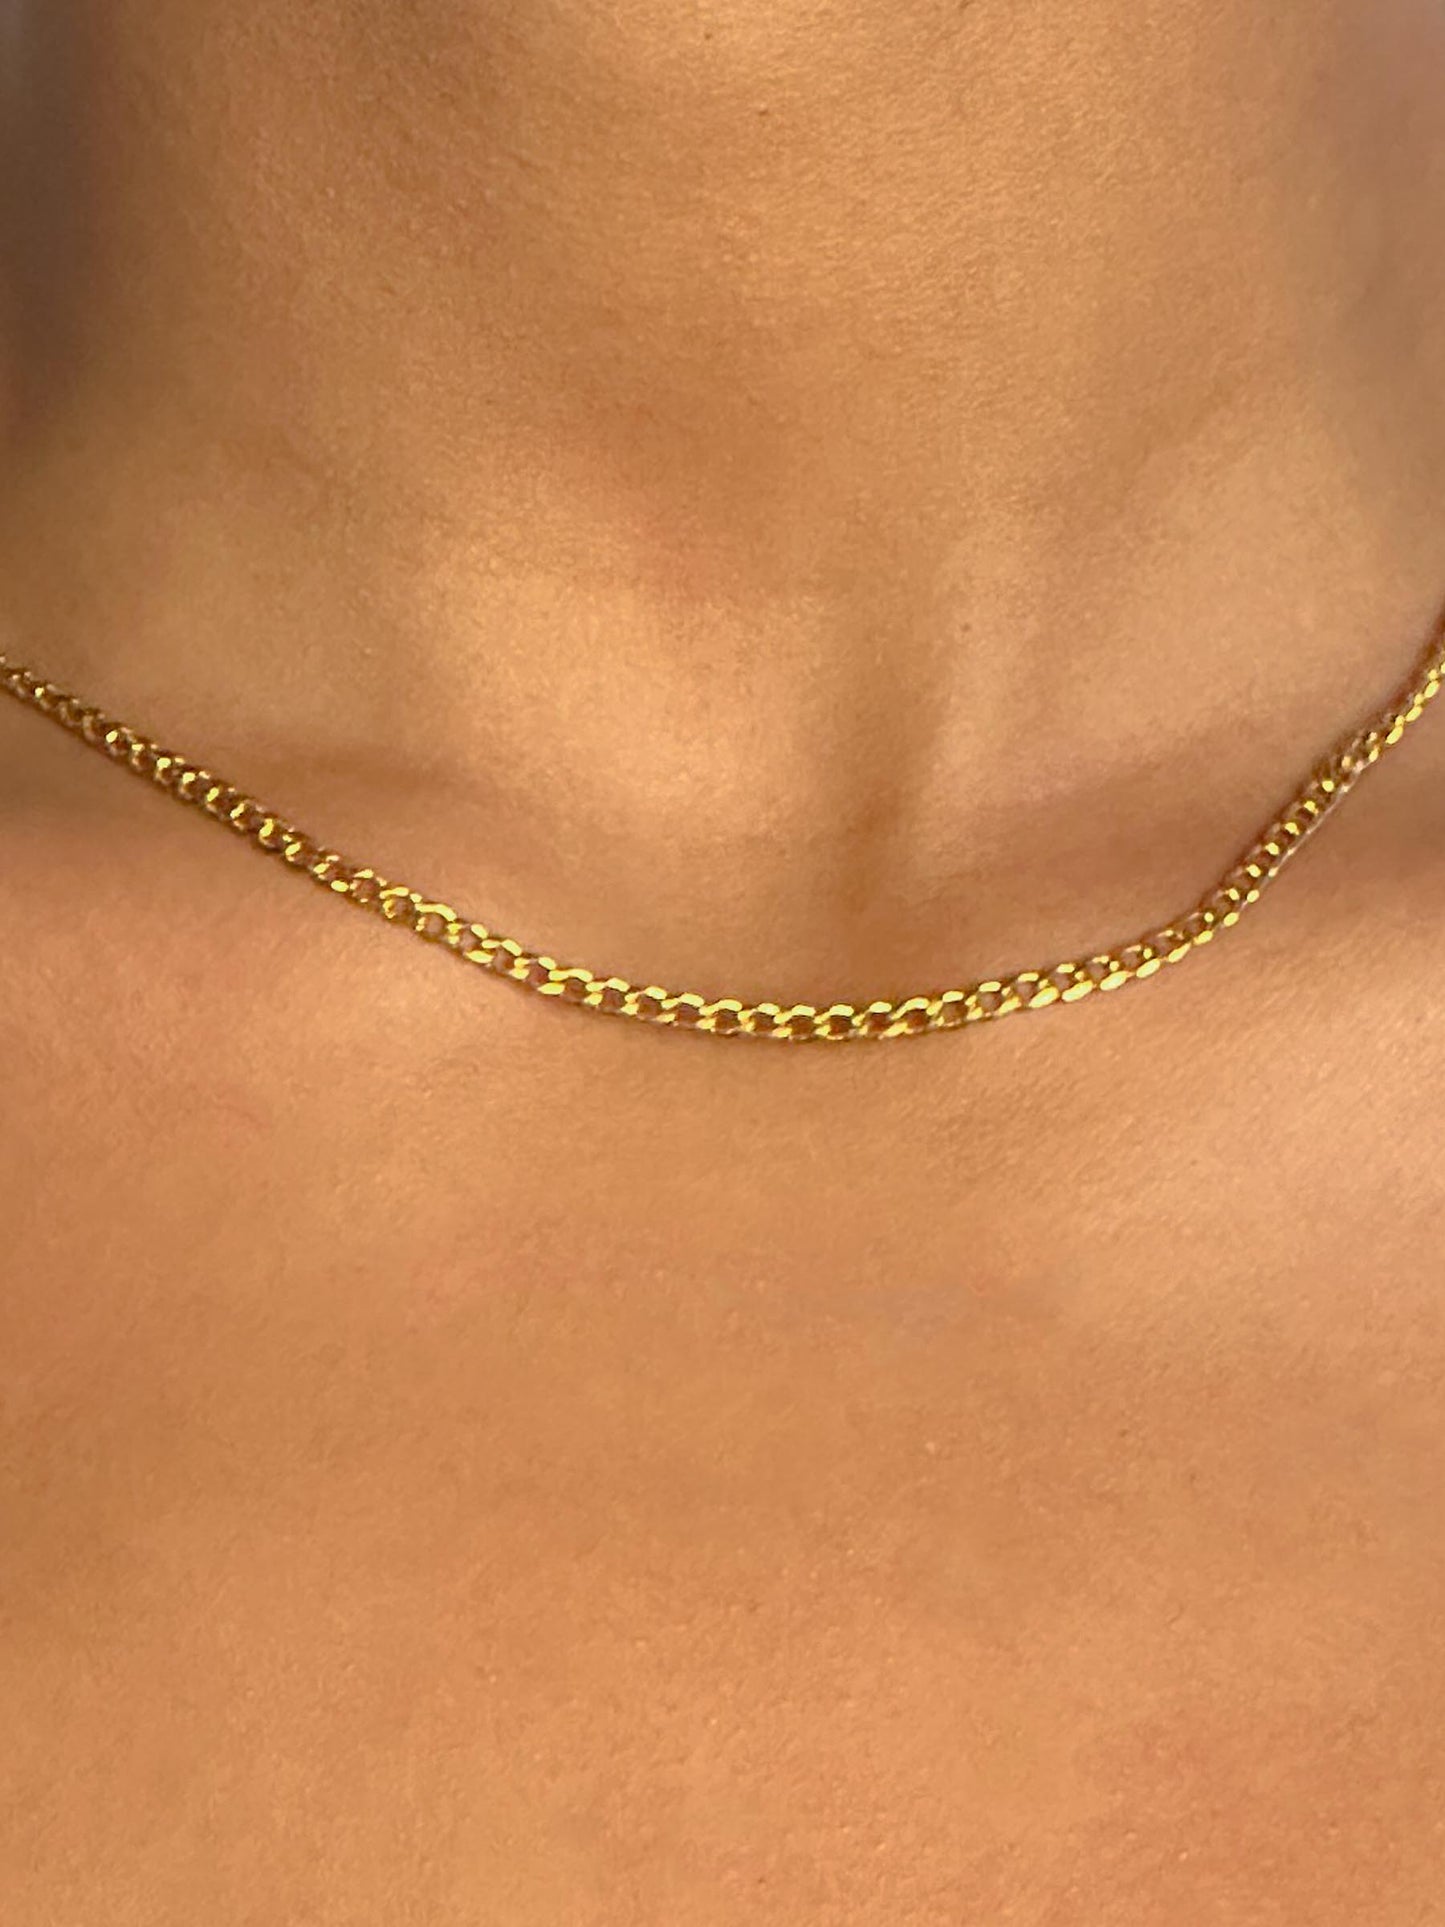 Zuri gold chain